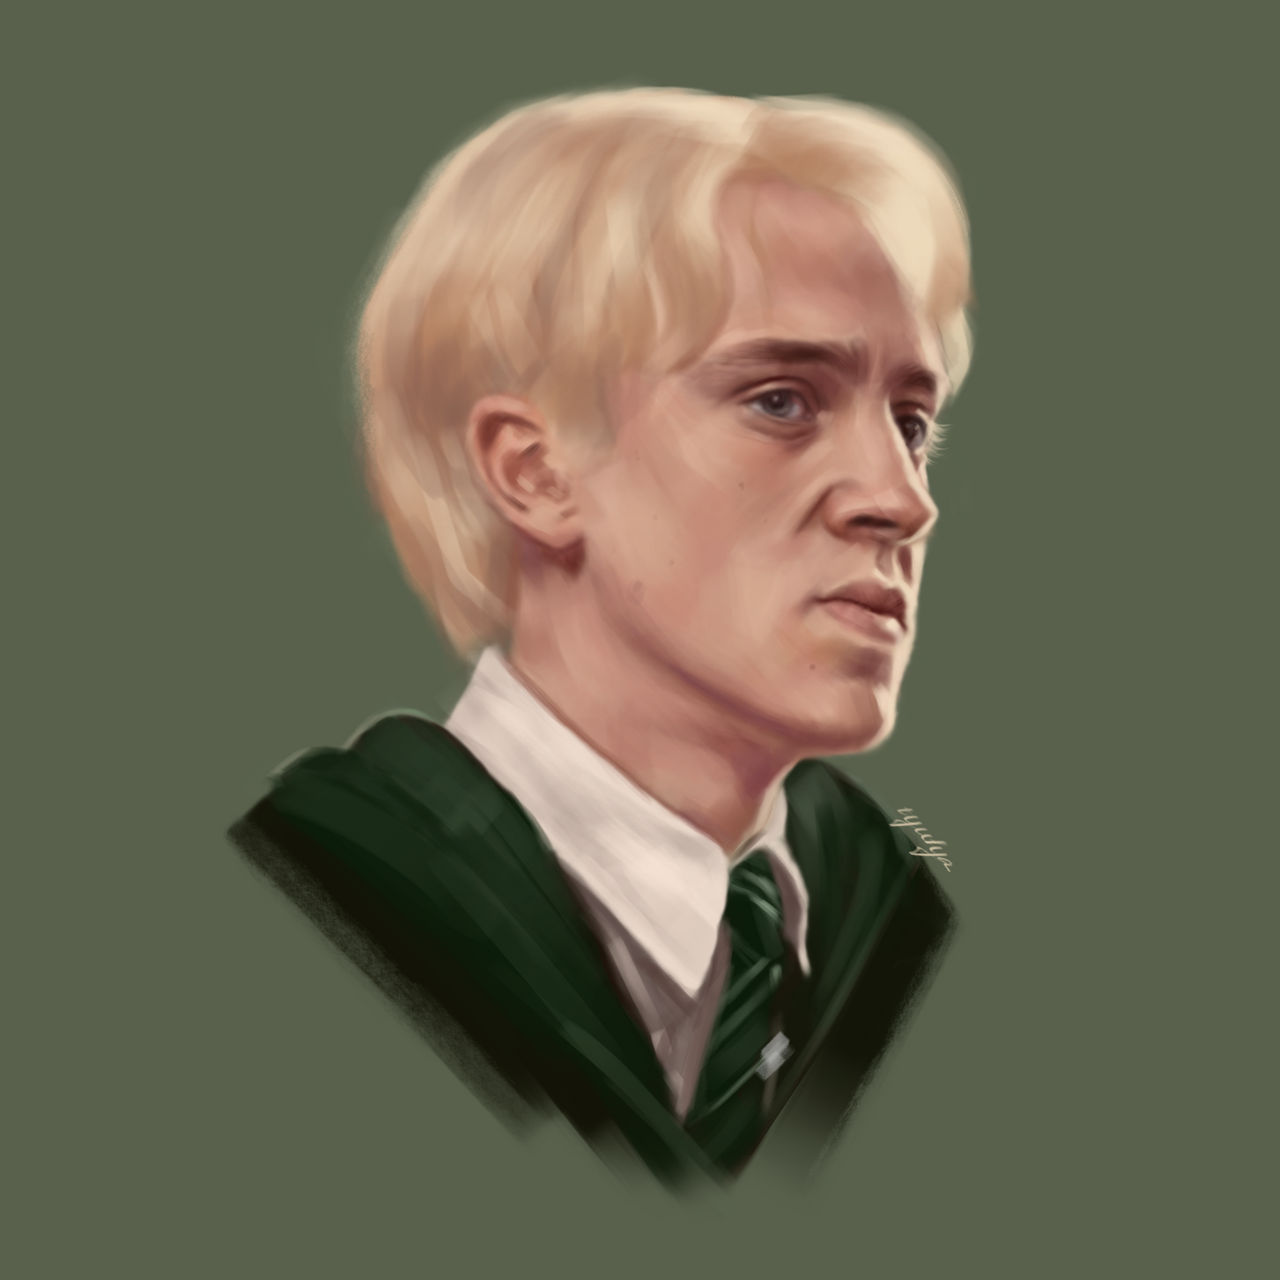 Fan art: Draco Malfoy by tyulya on DeviantArt